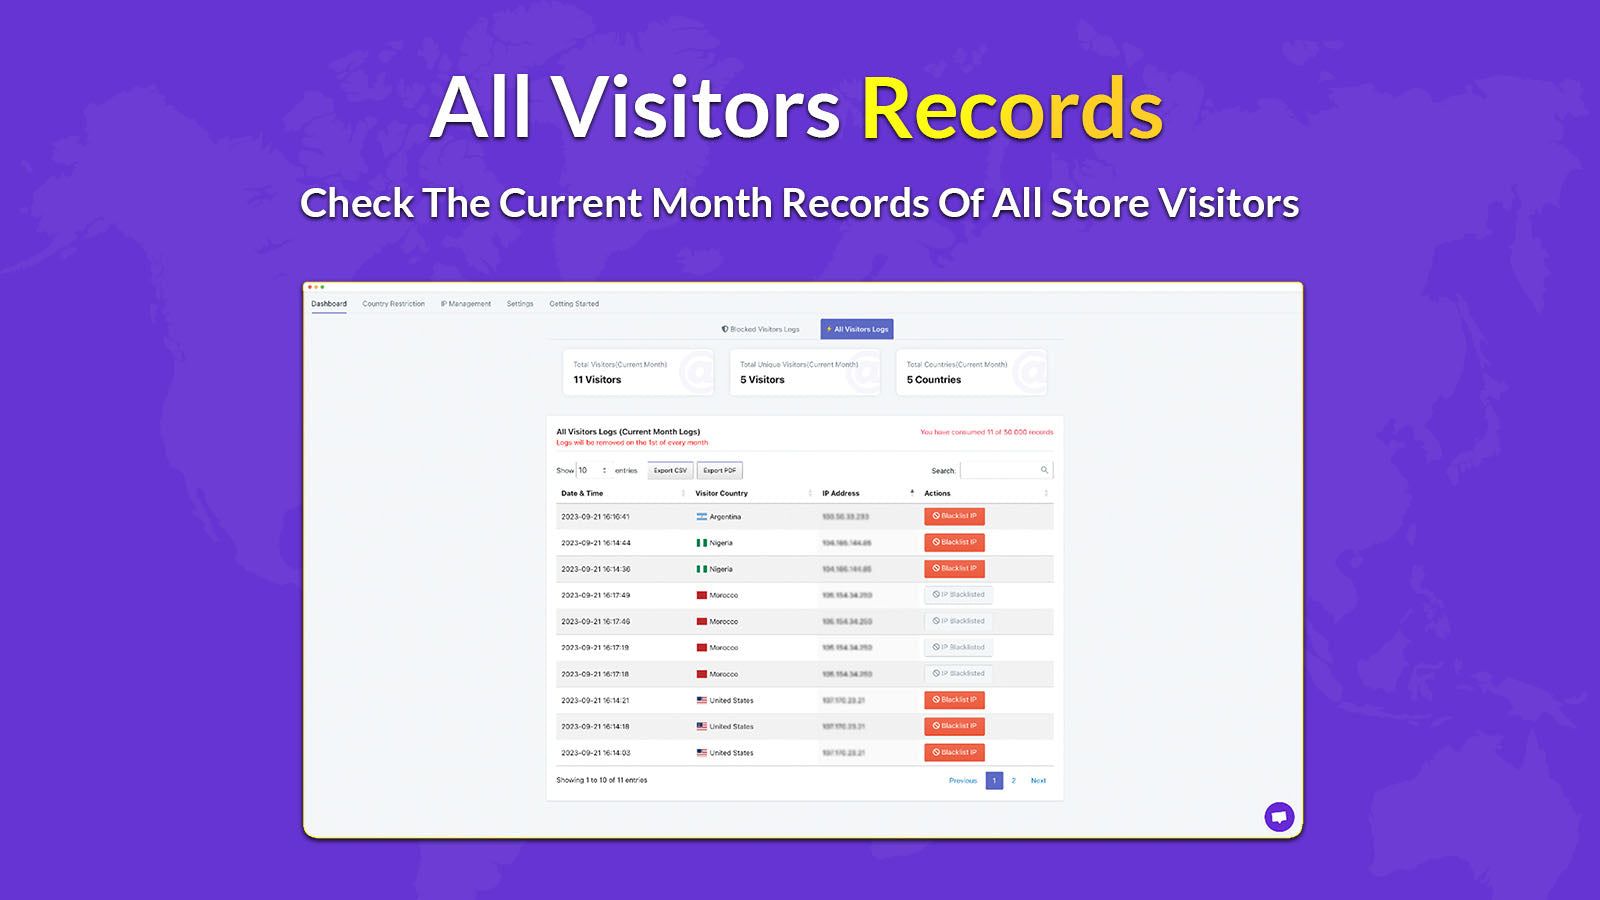 All visitors records